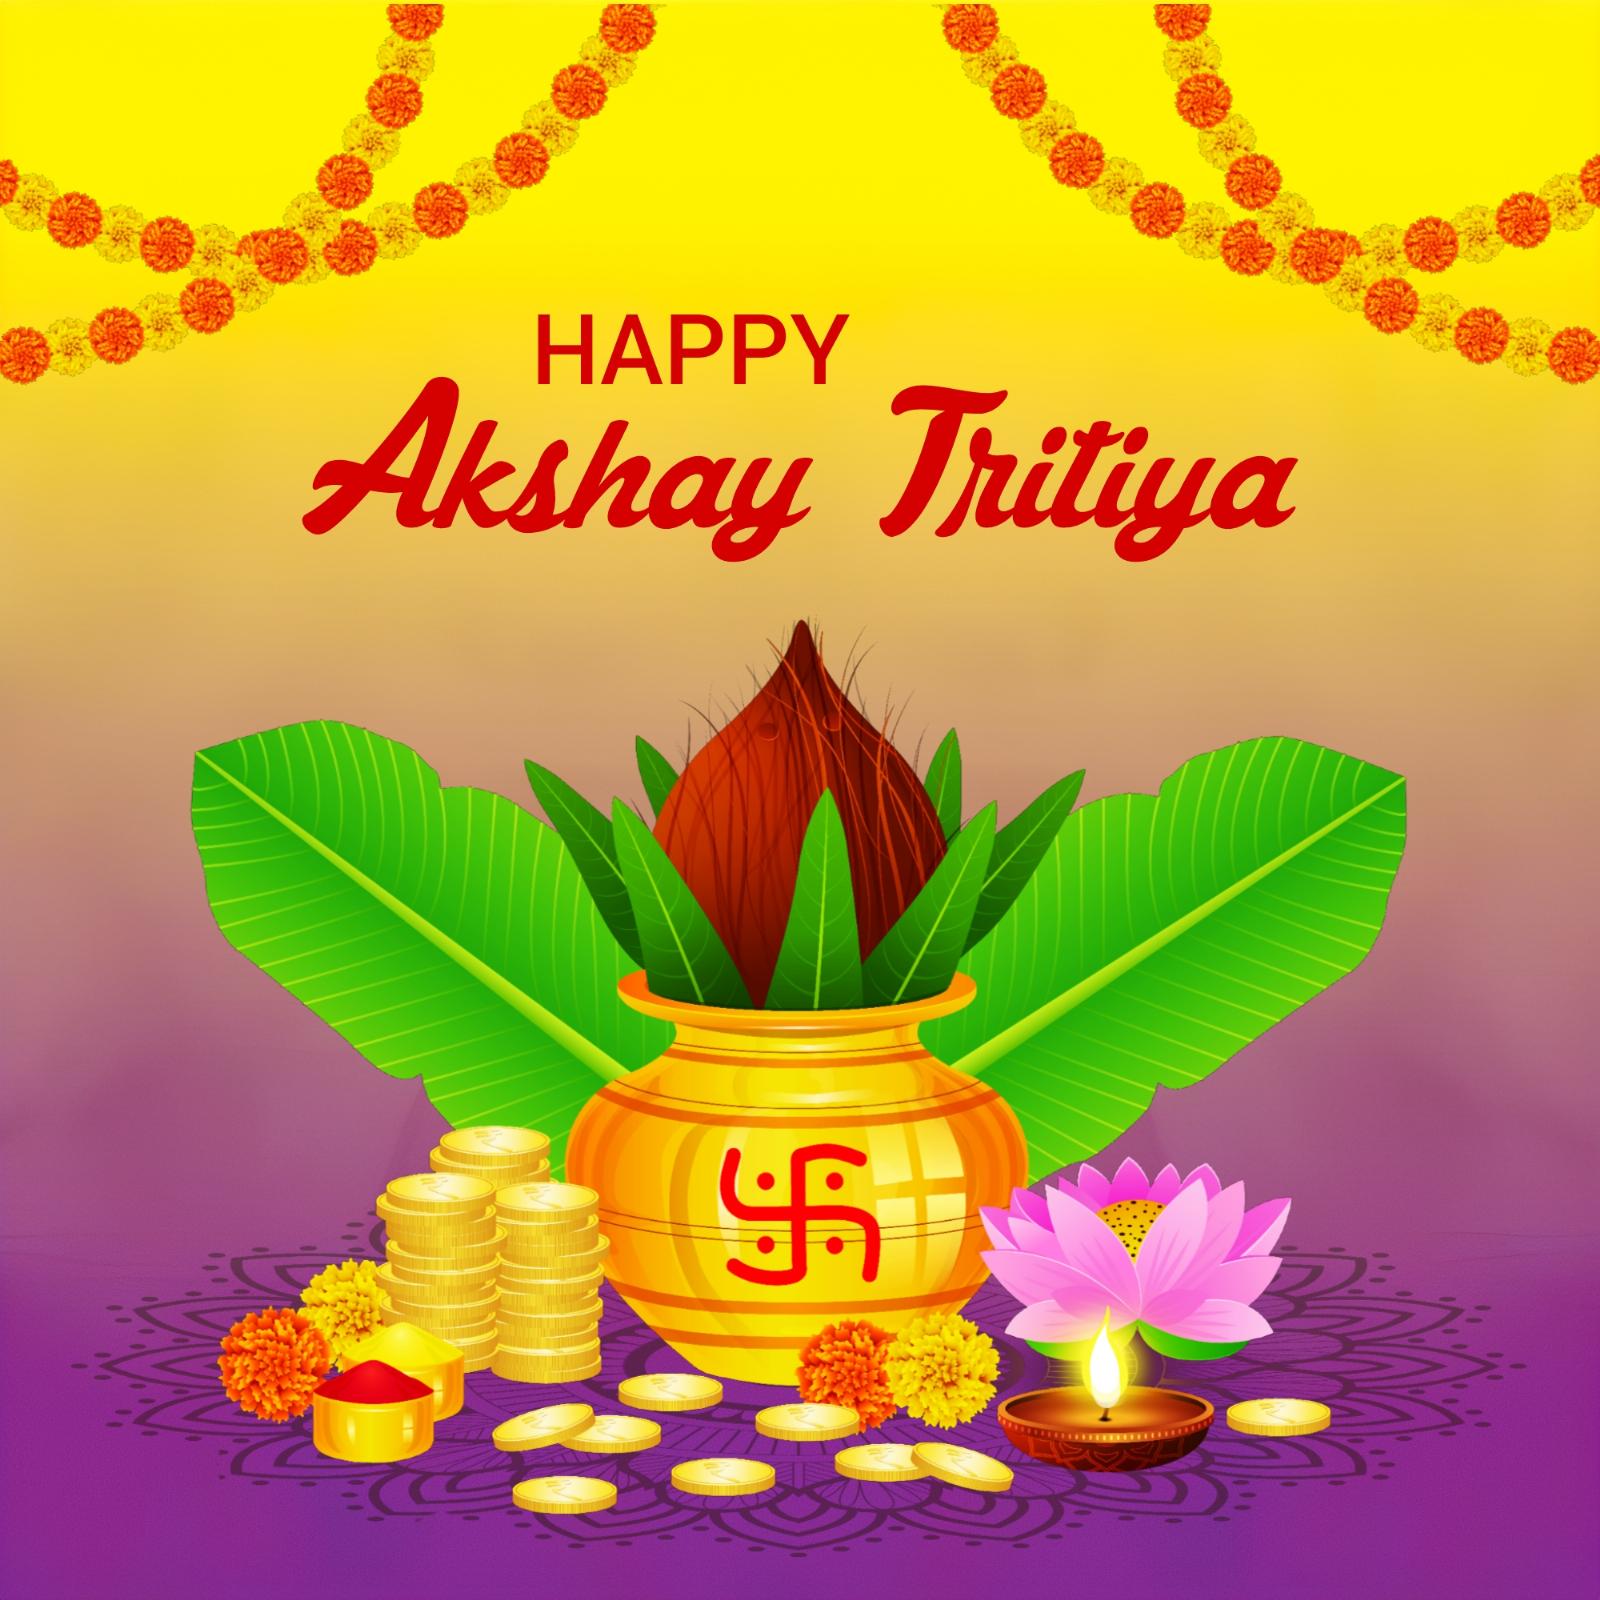 Happy Akshay Tritiya Good Morning Images